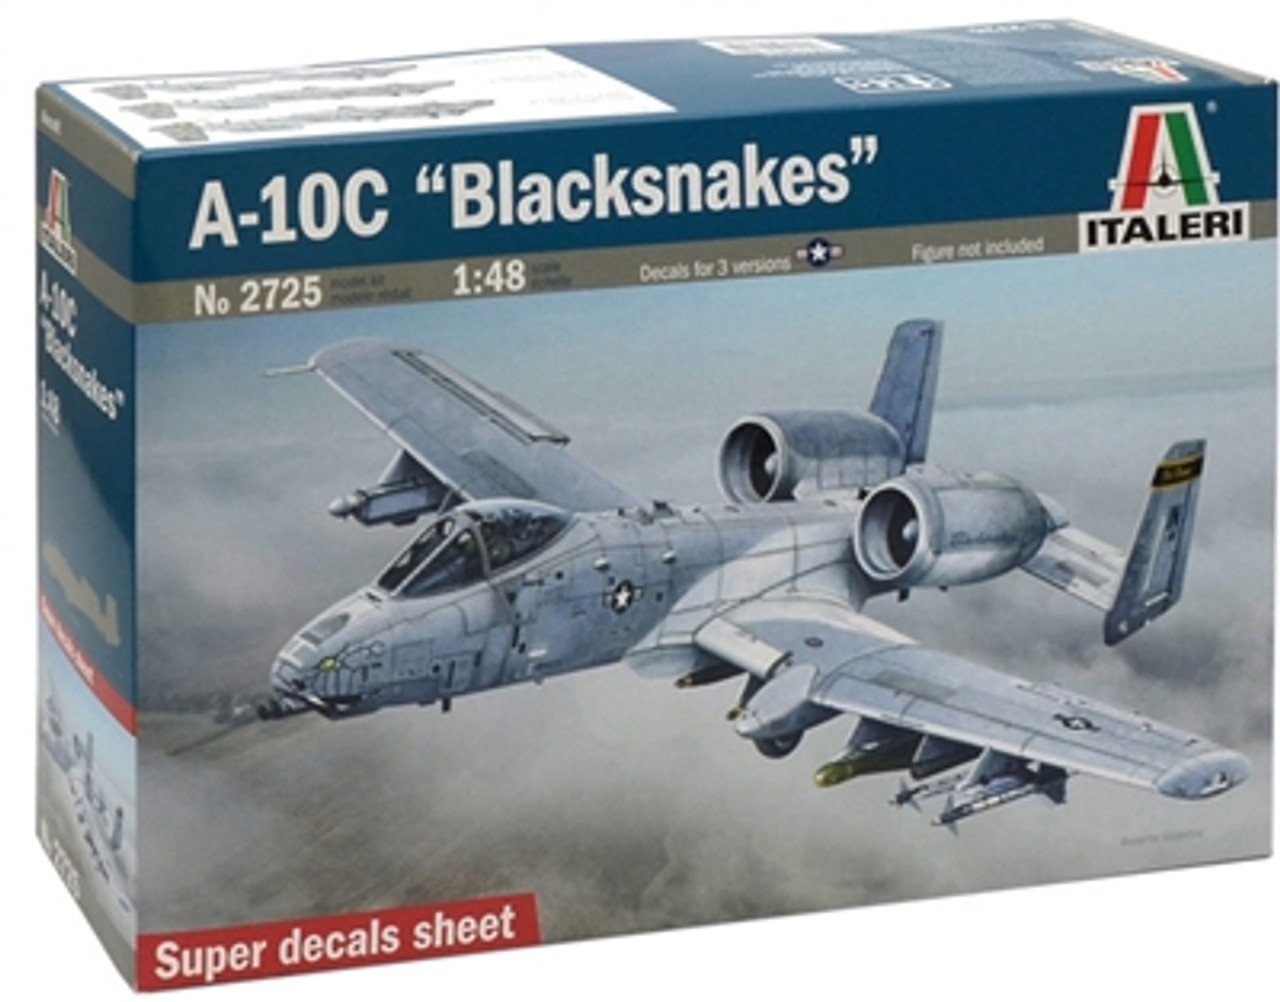 Italeri 2725 1/48 A-10C "Blacksnakes" Plastic Model Kit